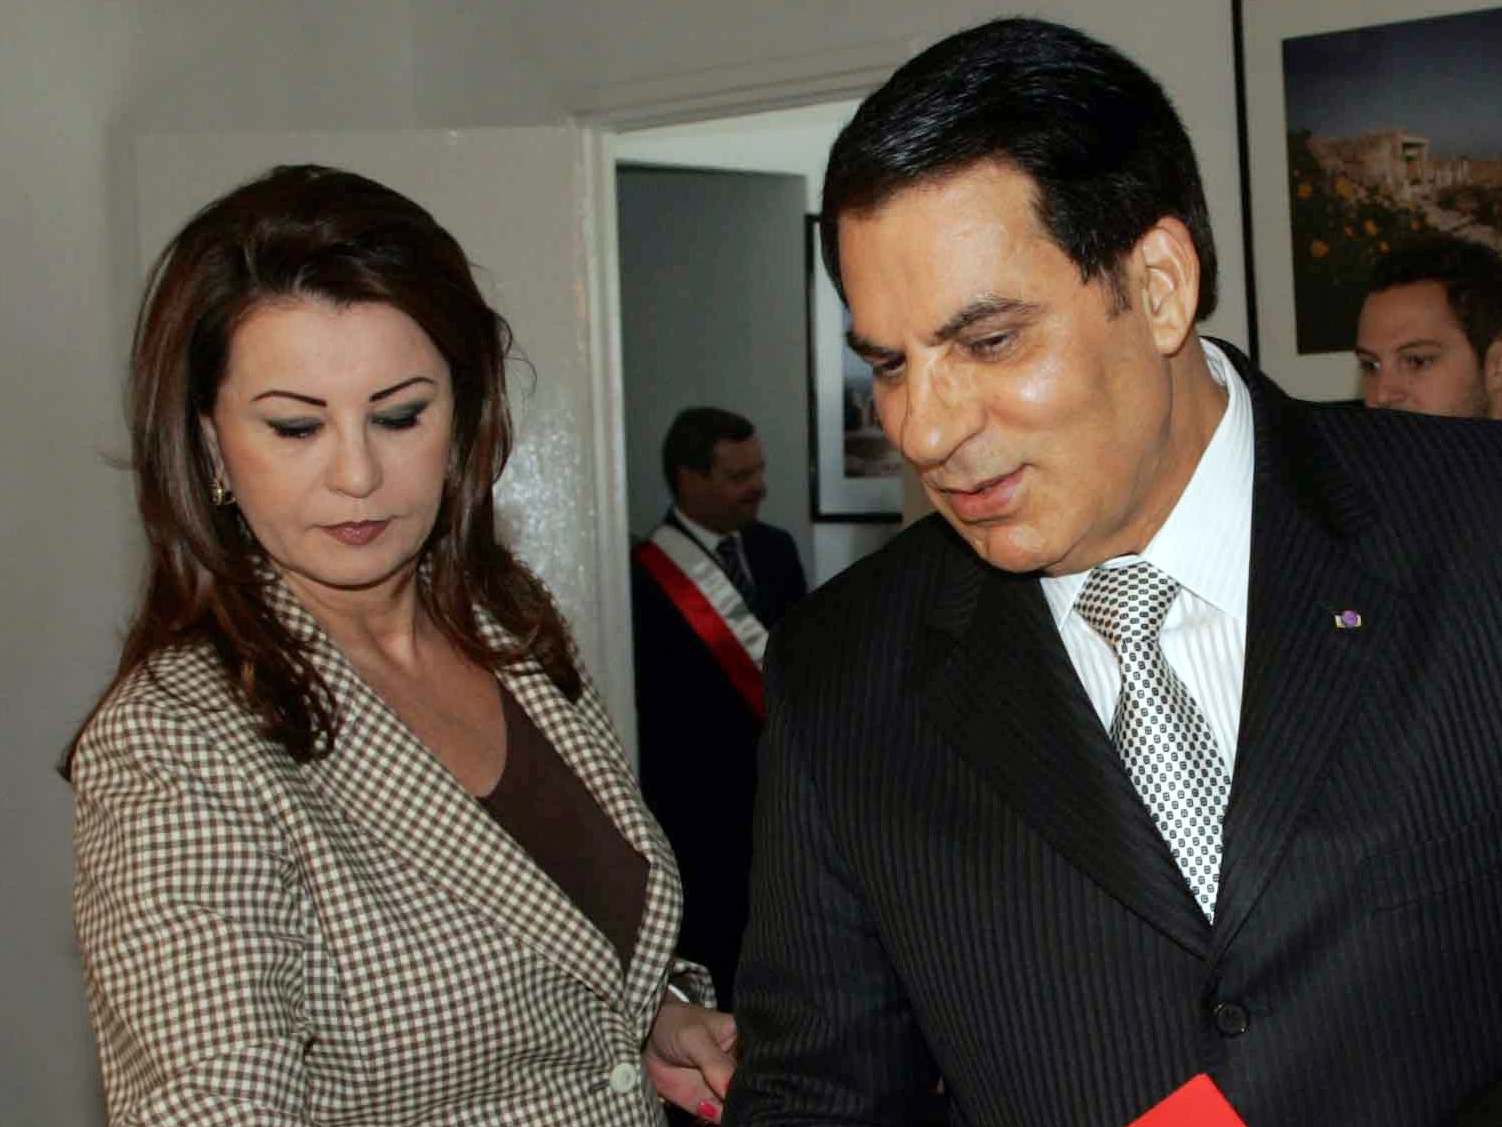 Former Tunisian president Zine El Abidine Ben Ali accompanied by his wife Leila Ben Ali during the presidential election campaign in Tunis, Tunisia, 11 November, 2010.